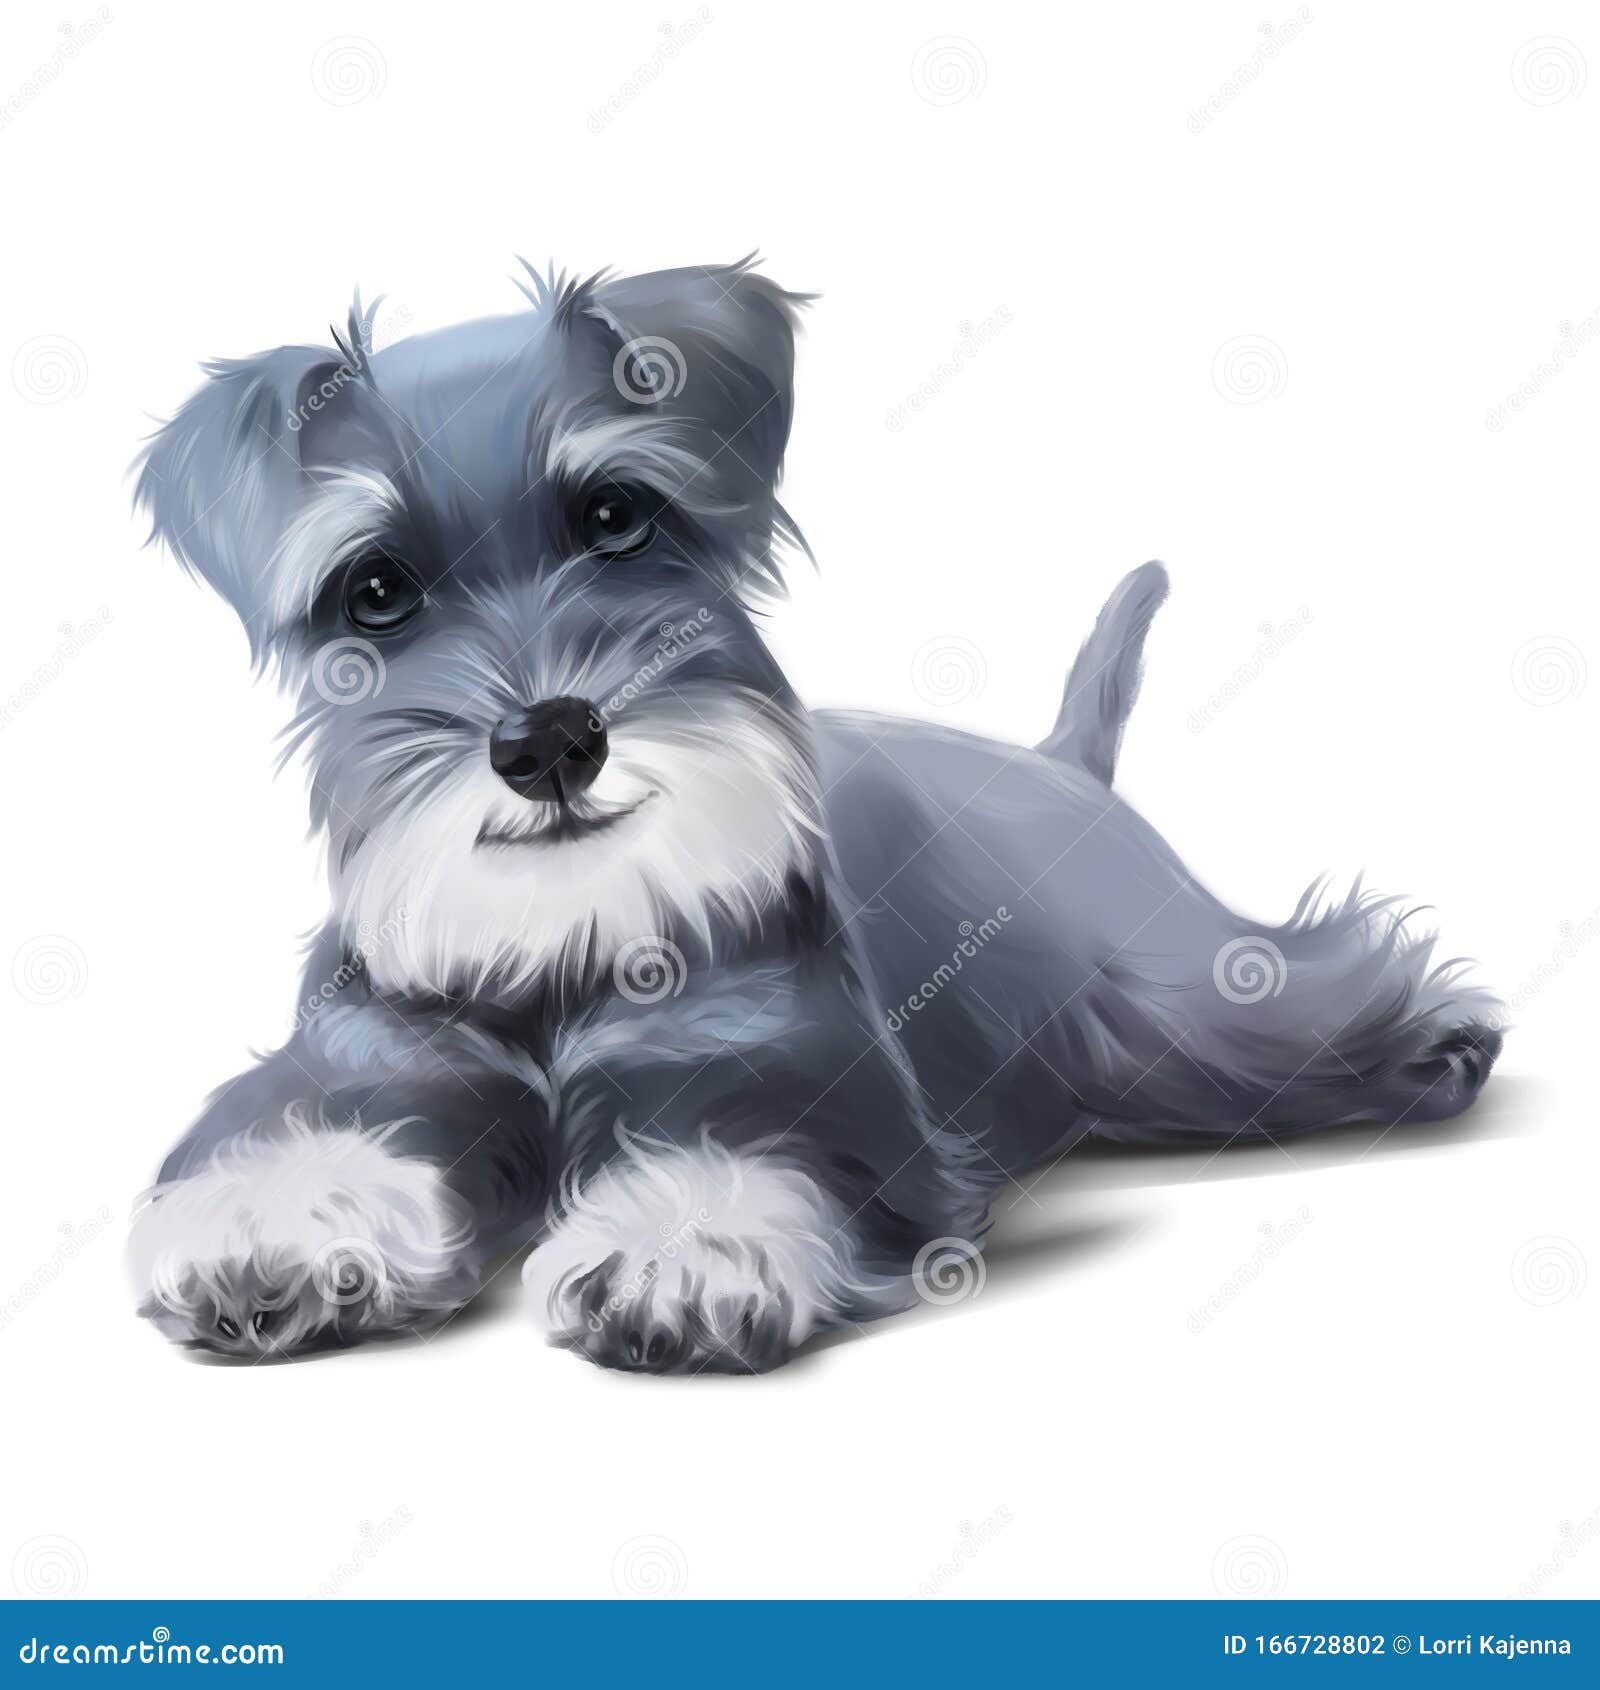 miniature schnauzer puppy. watercolor drawing